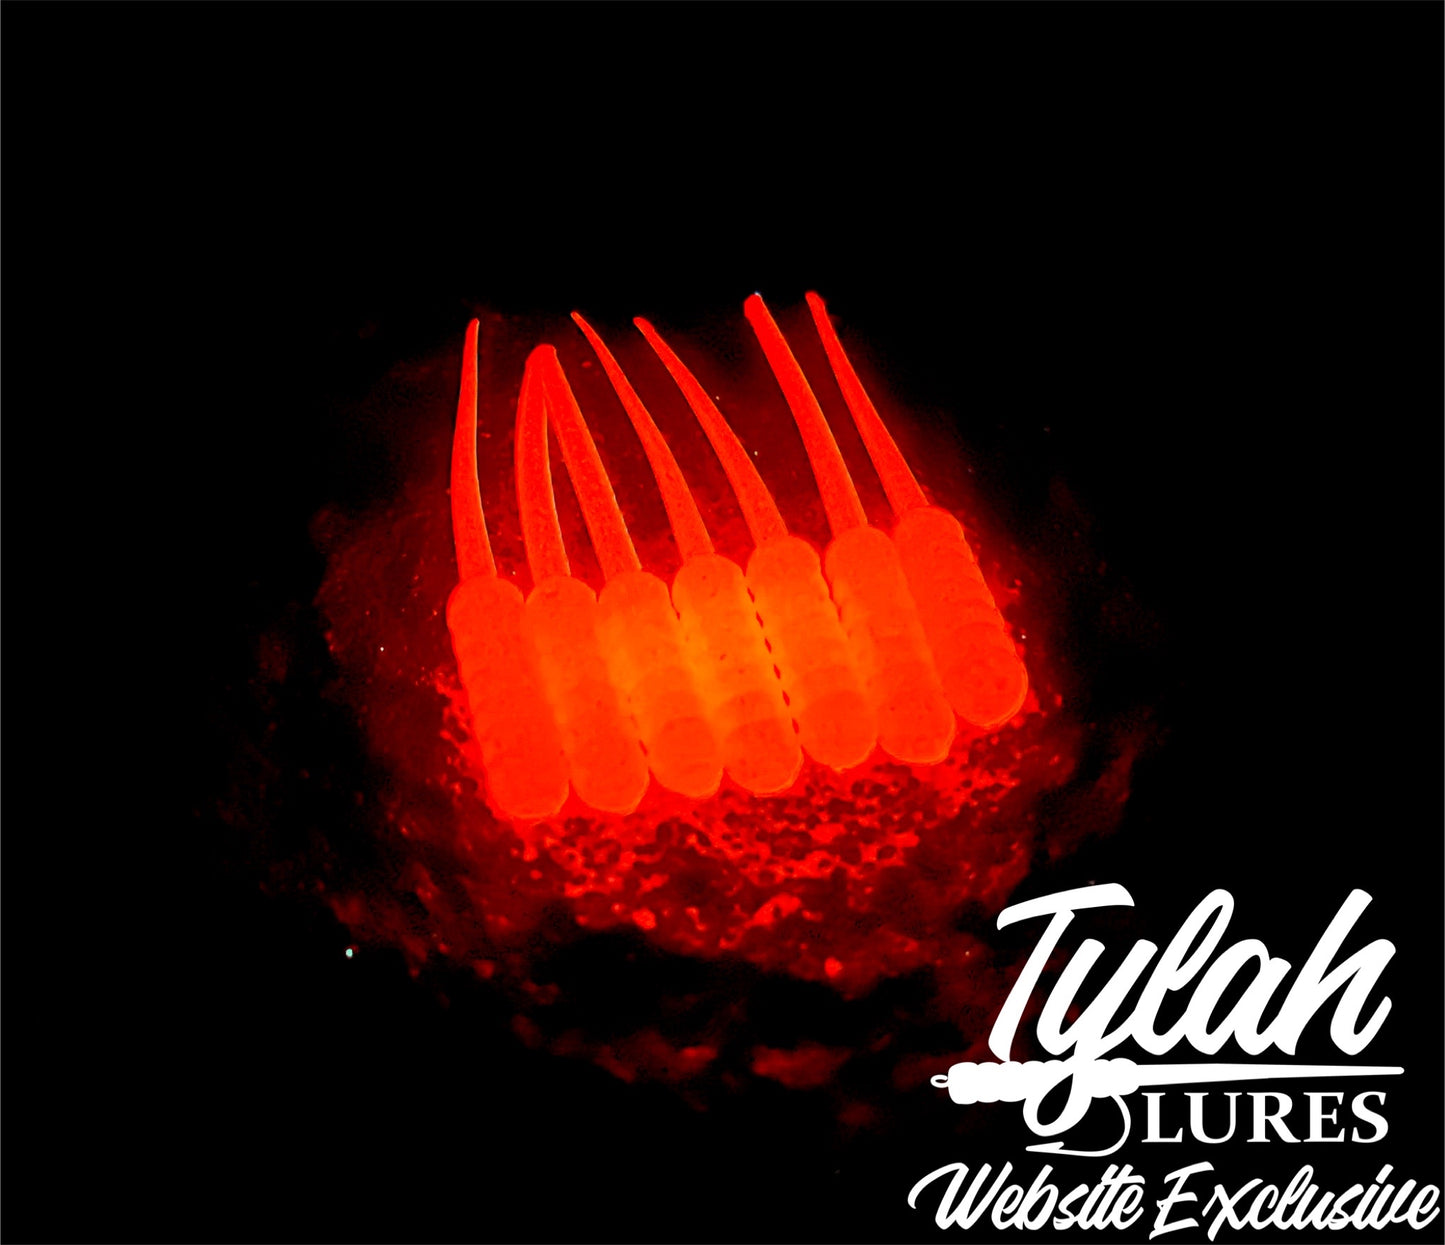 TylahLures Website Exclusive UV Red Glow 1.5in.